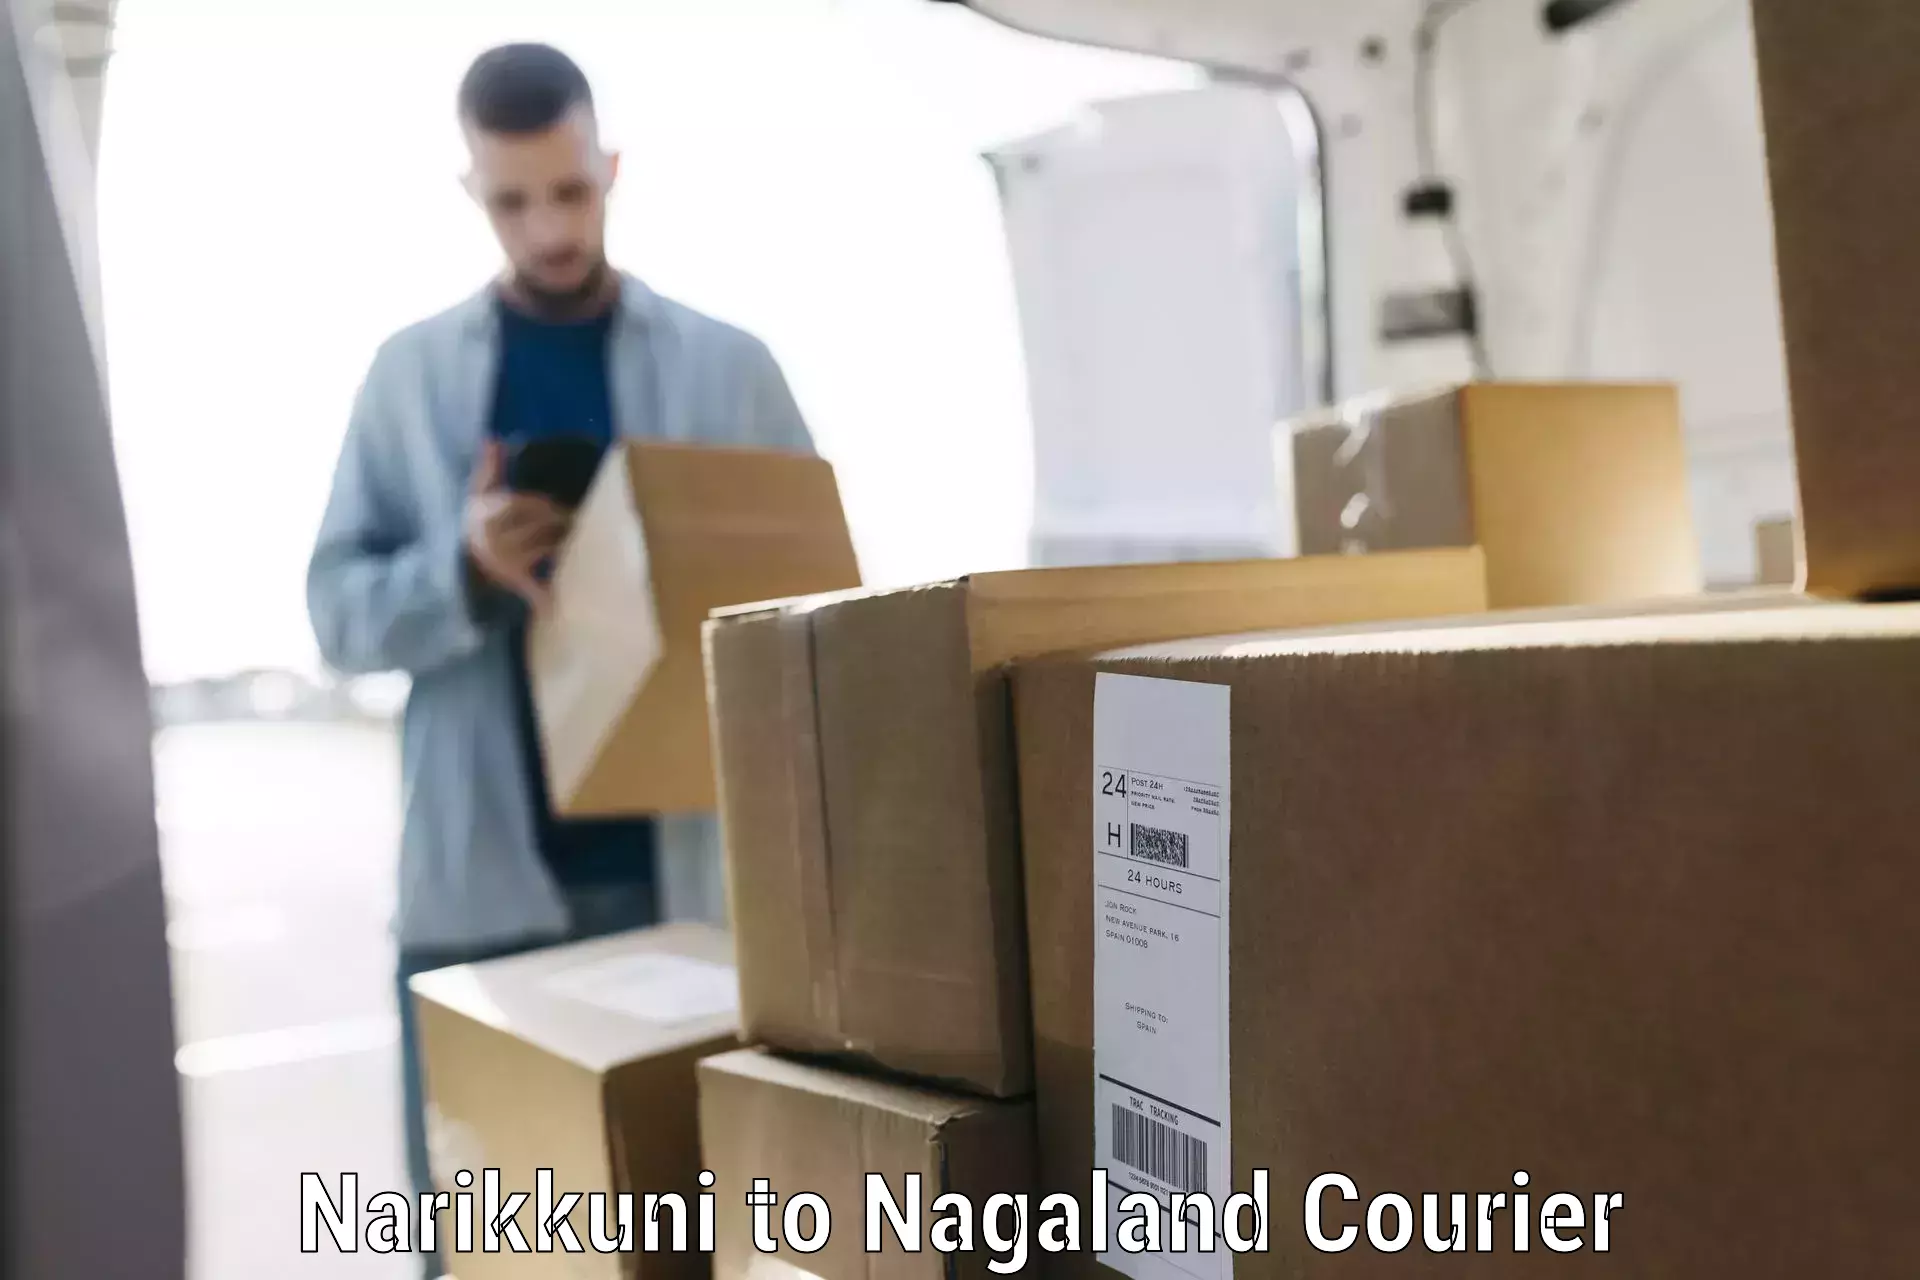 Luggage transfer service Narikkuni to Nagaland